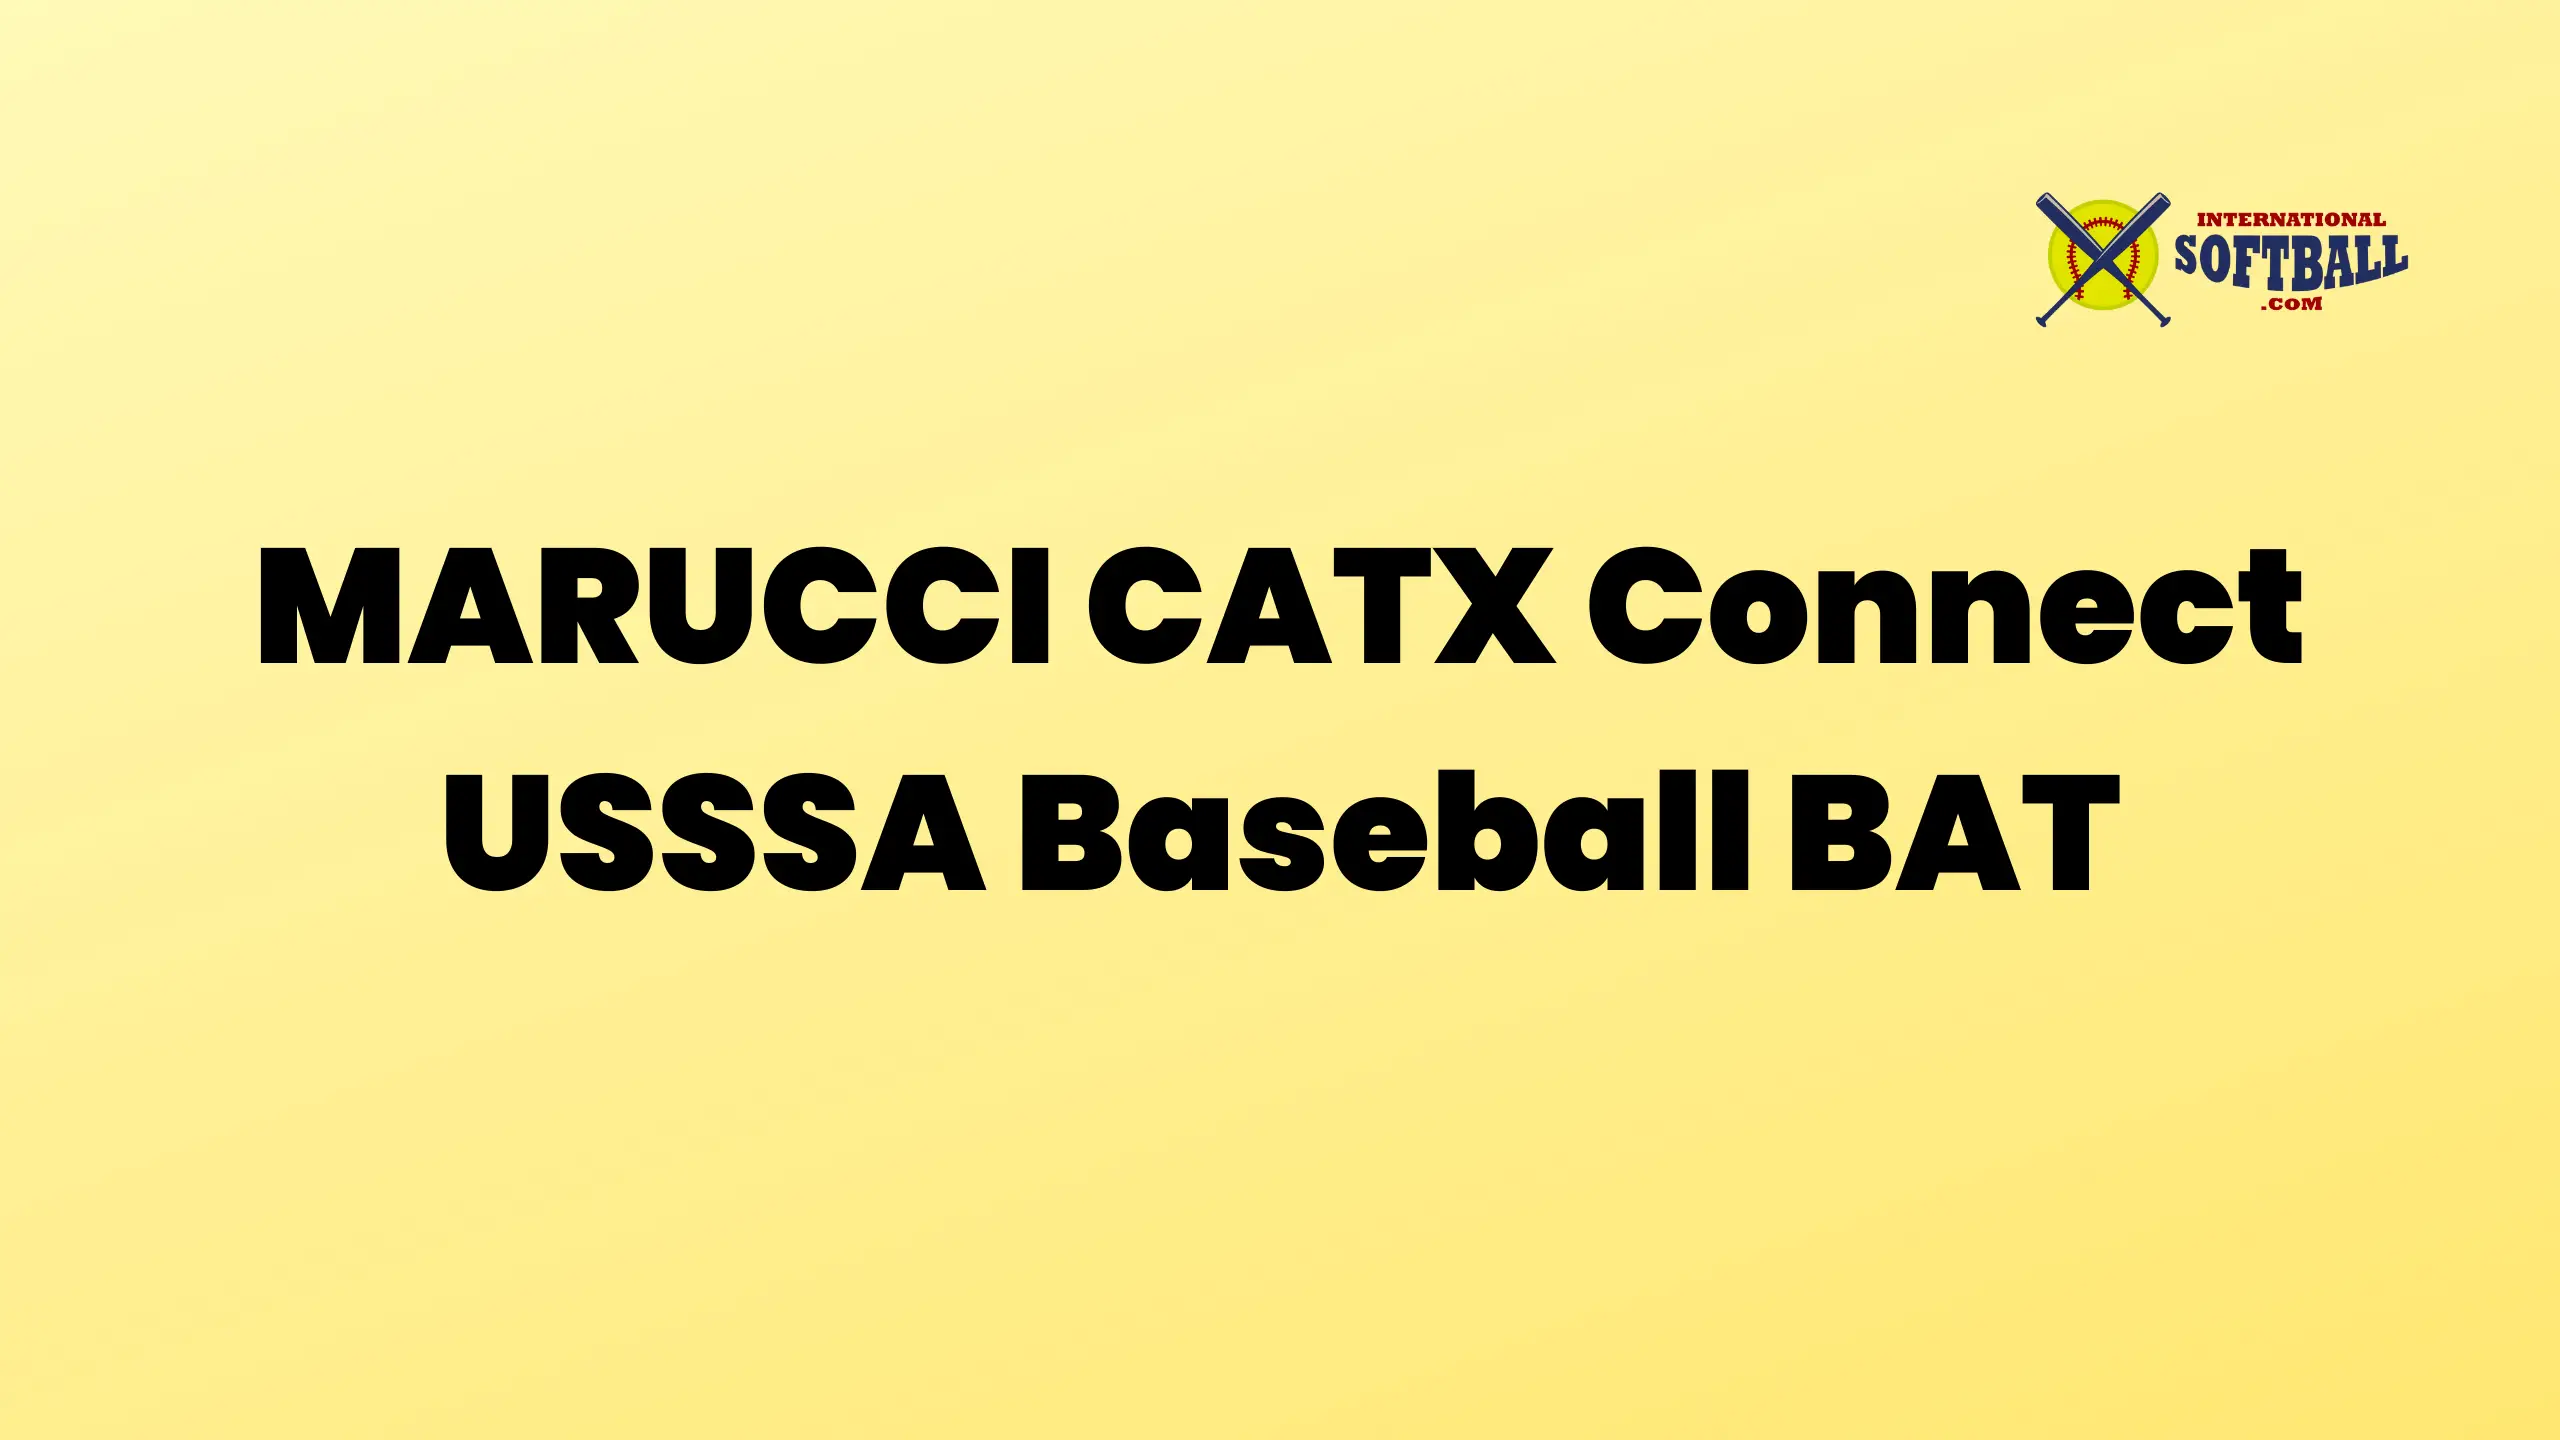 MARUCCI CATX Connect USSSA Baseball BAT